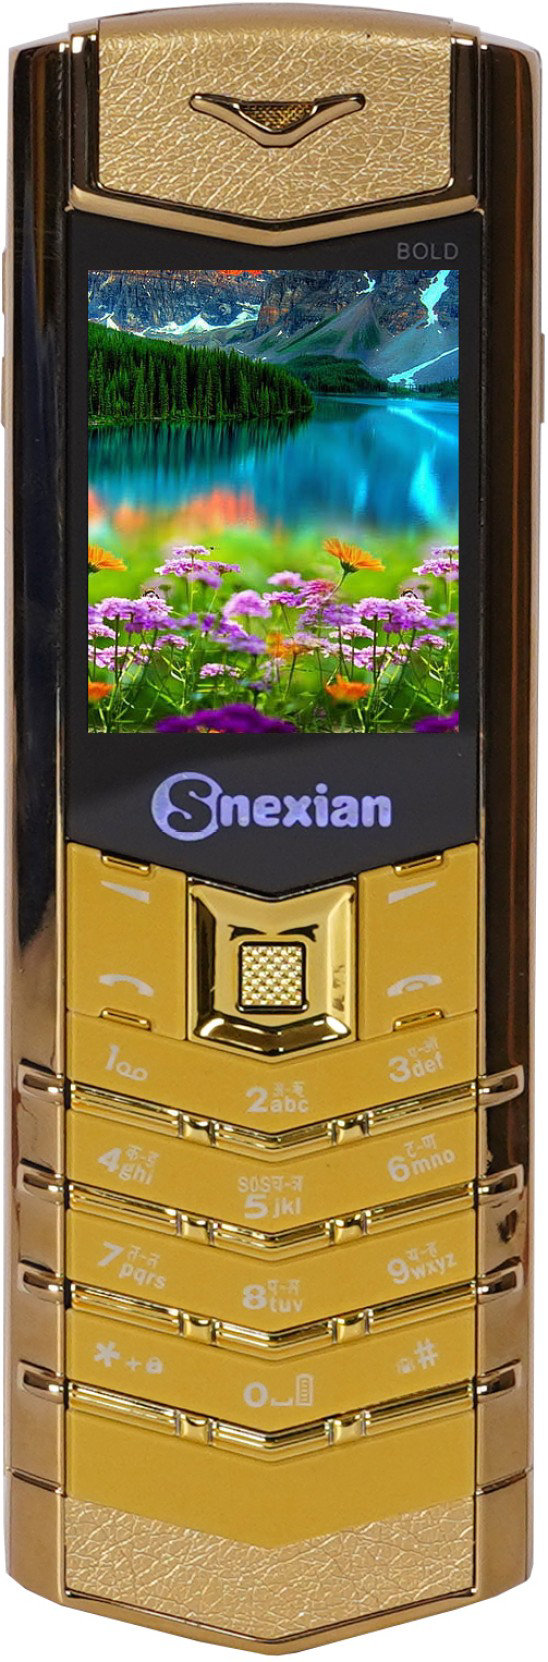 Snexian vertu button vartu dual sim phone - Red